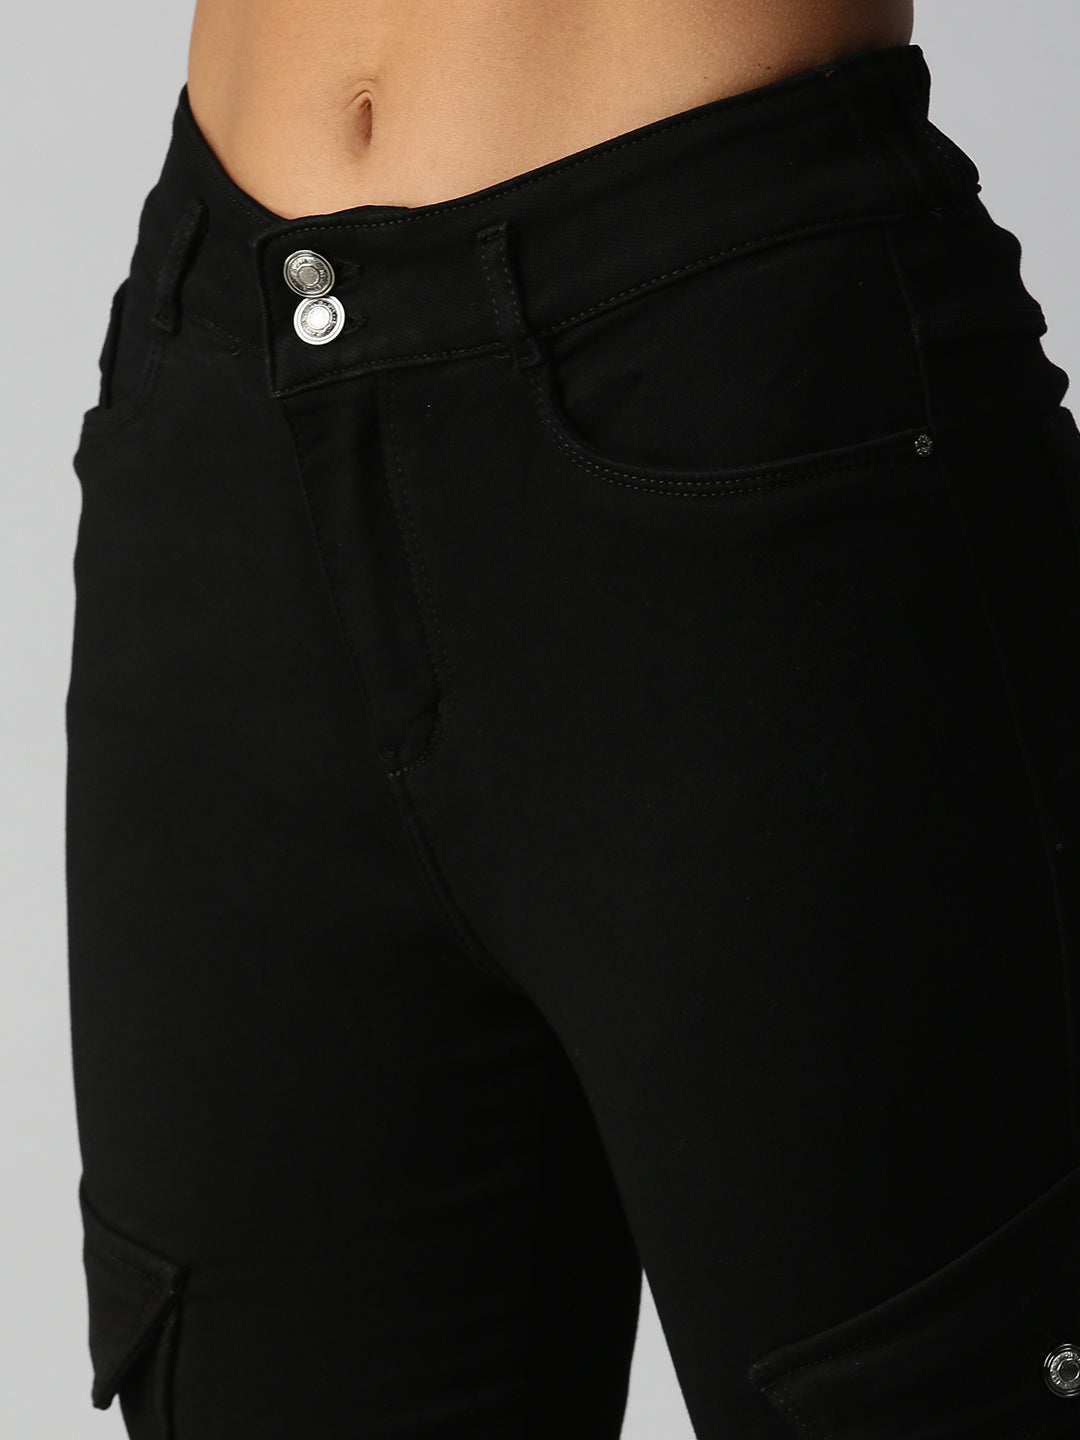 Women's Black Solid Denim Jeans